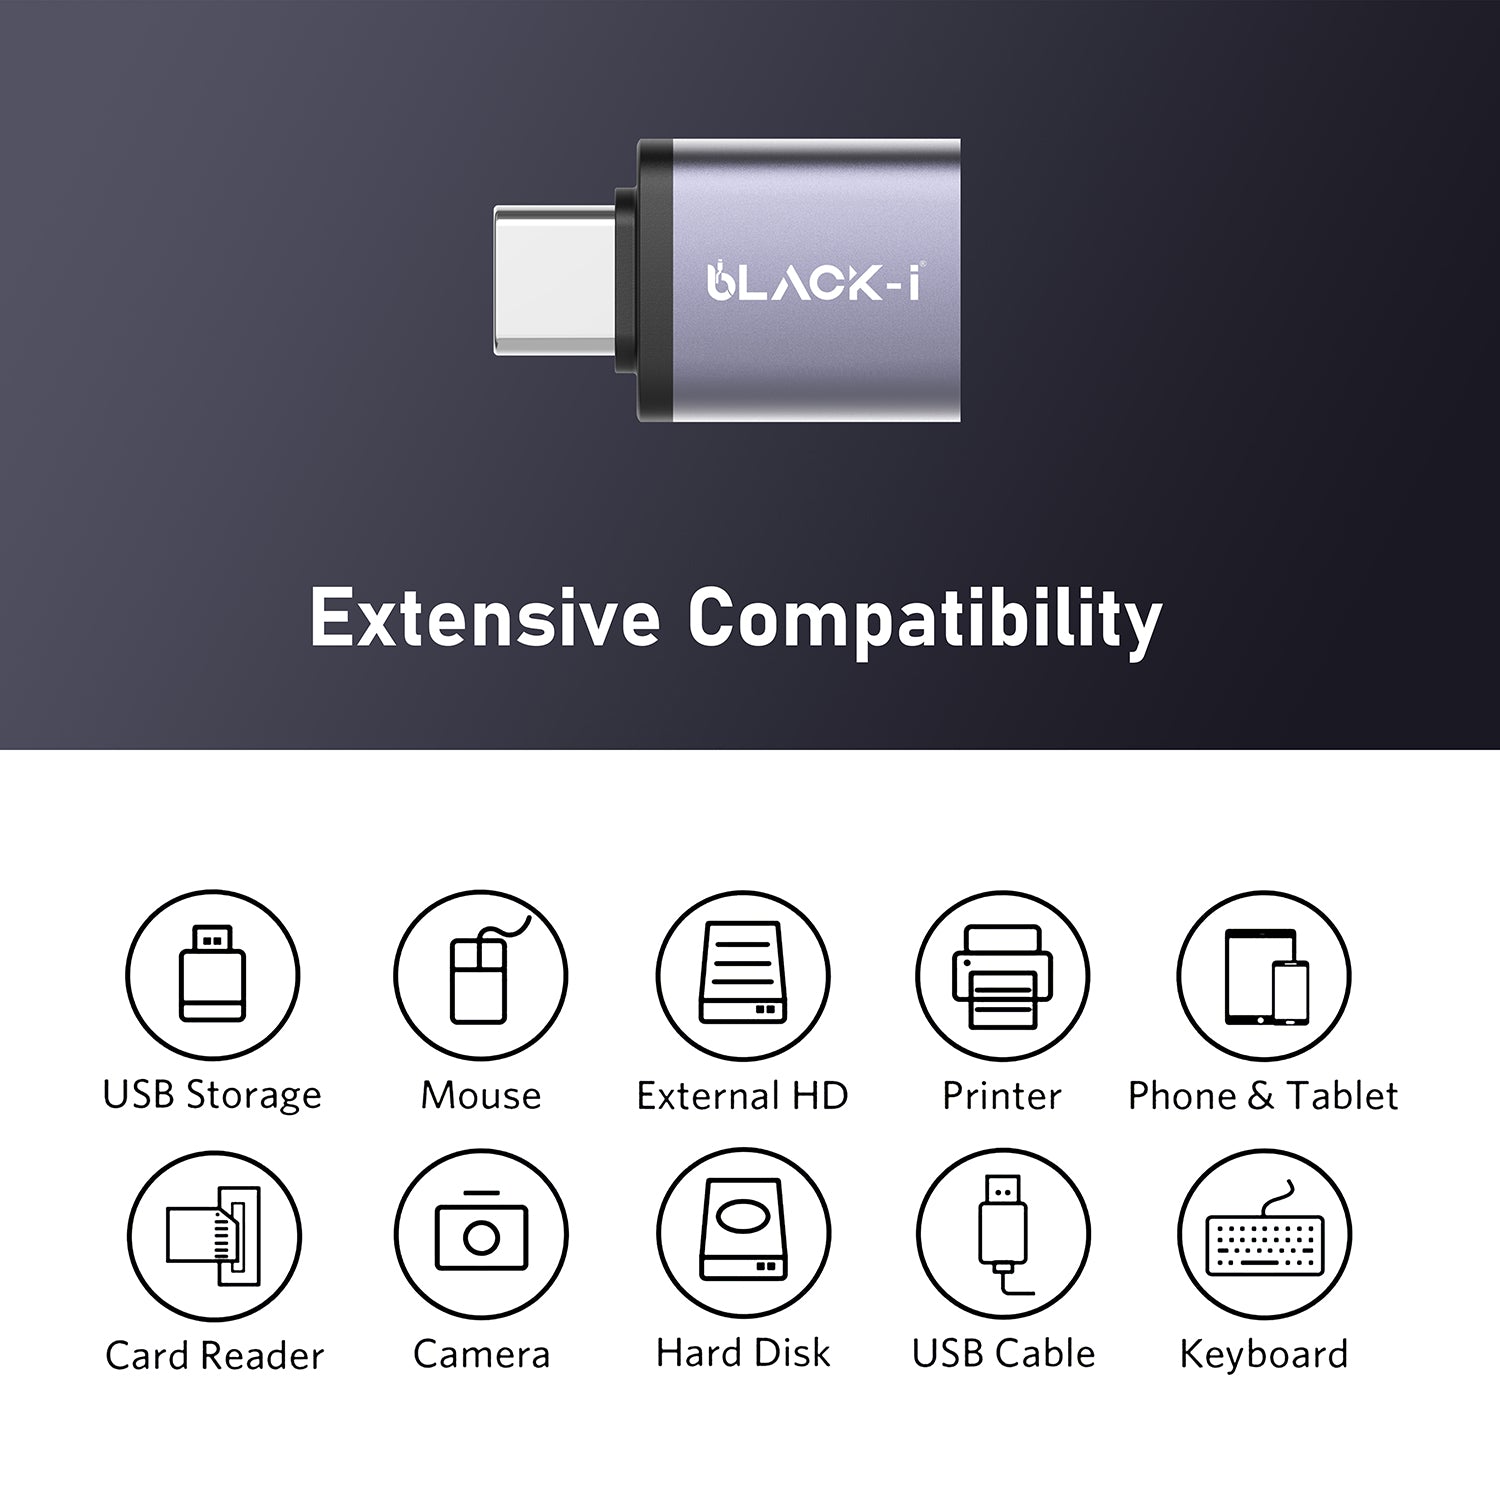 Black-i USB-C to USB 3.0 OTG Converter